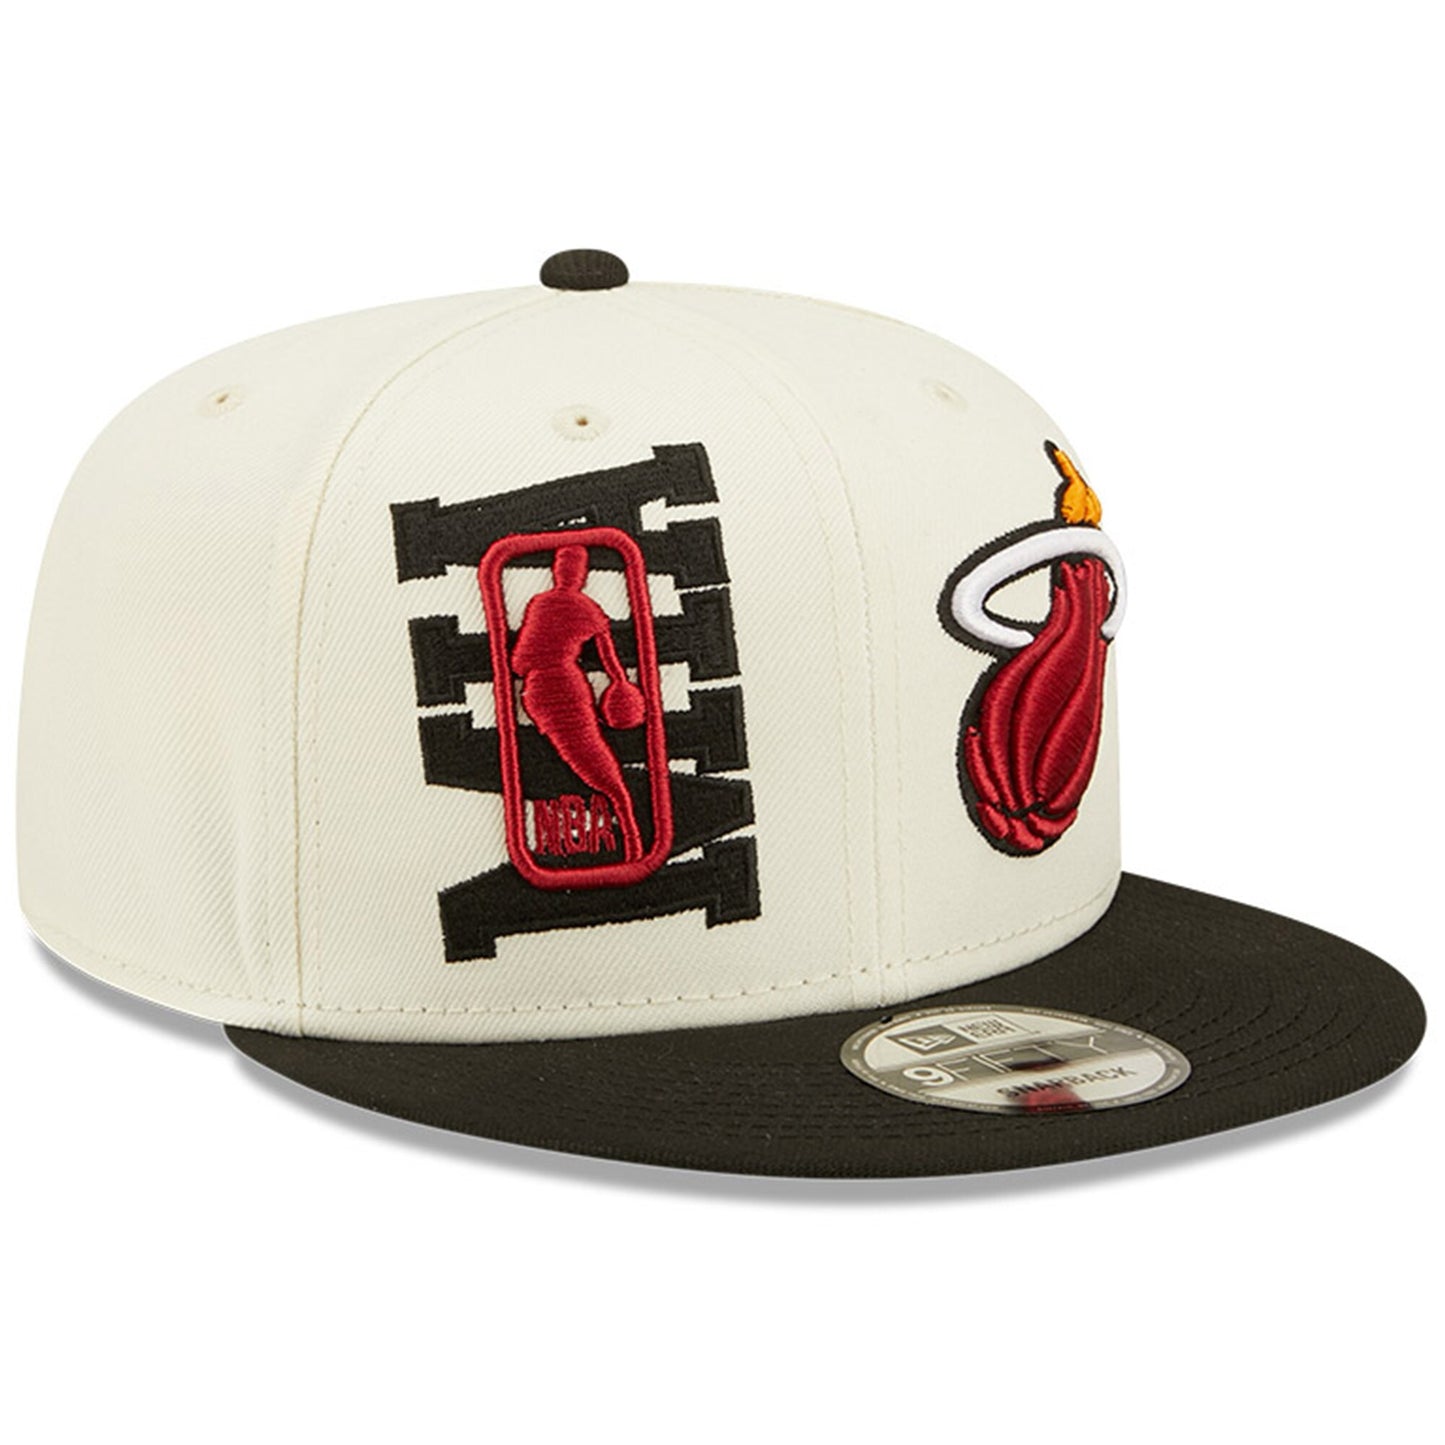 Miami Heat New Era 2022 NBA Draft 9FIFTY Snapback Adjustable Hat - Cream/Black